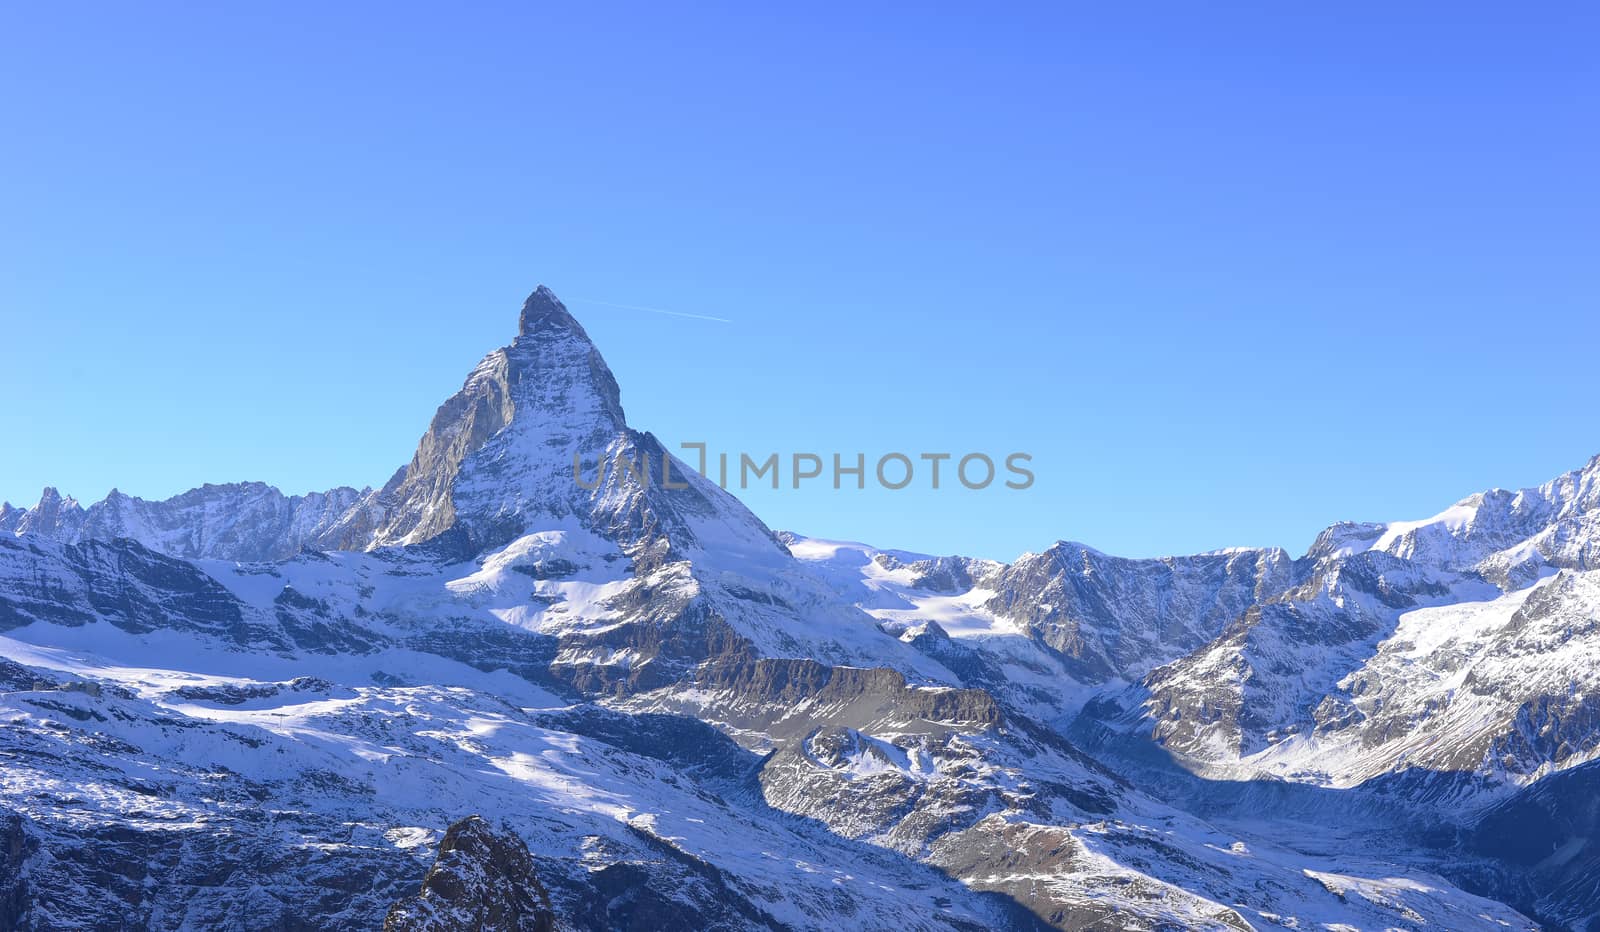 The most beautiful Swiss Alps, Matterhorn in Zermatt with tourist, Switzerland.